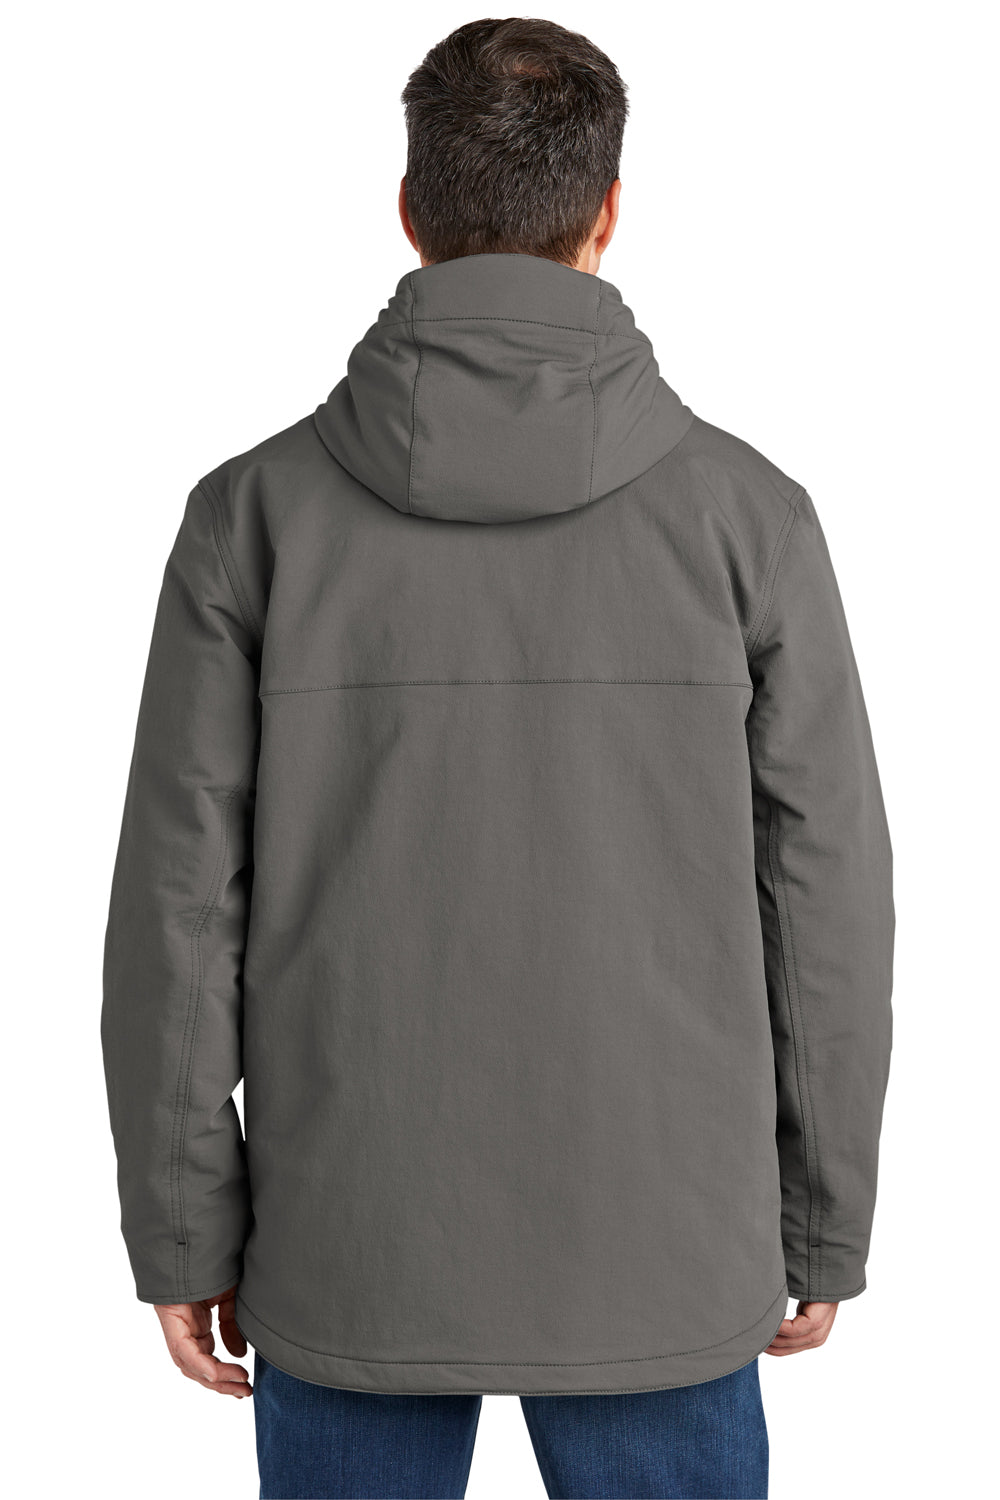 Carhartt CT105533 Mens Super Dux Wind & Water Resistant Full Zip Hooded Jacket Gravel Grey Model Back